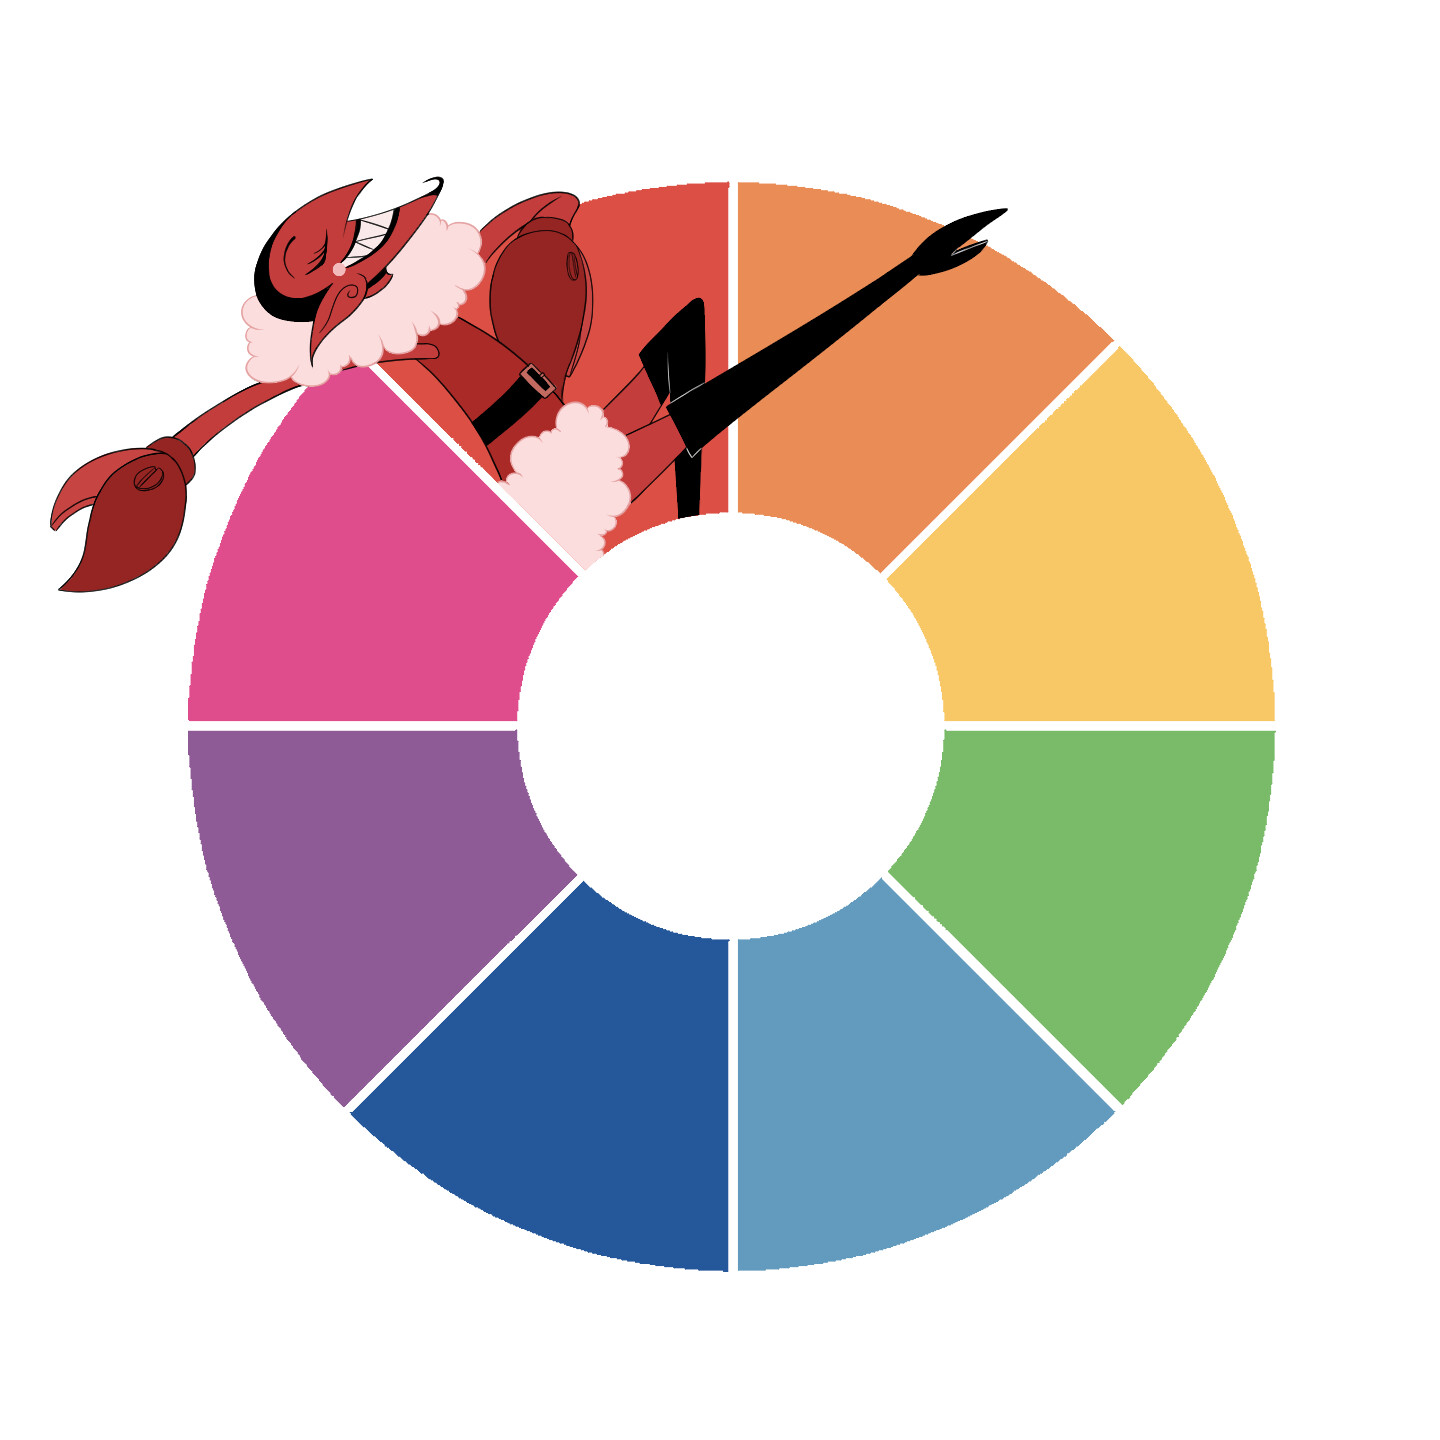 color wheel chart Archives - Slidevilla